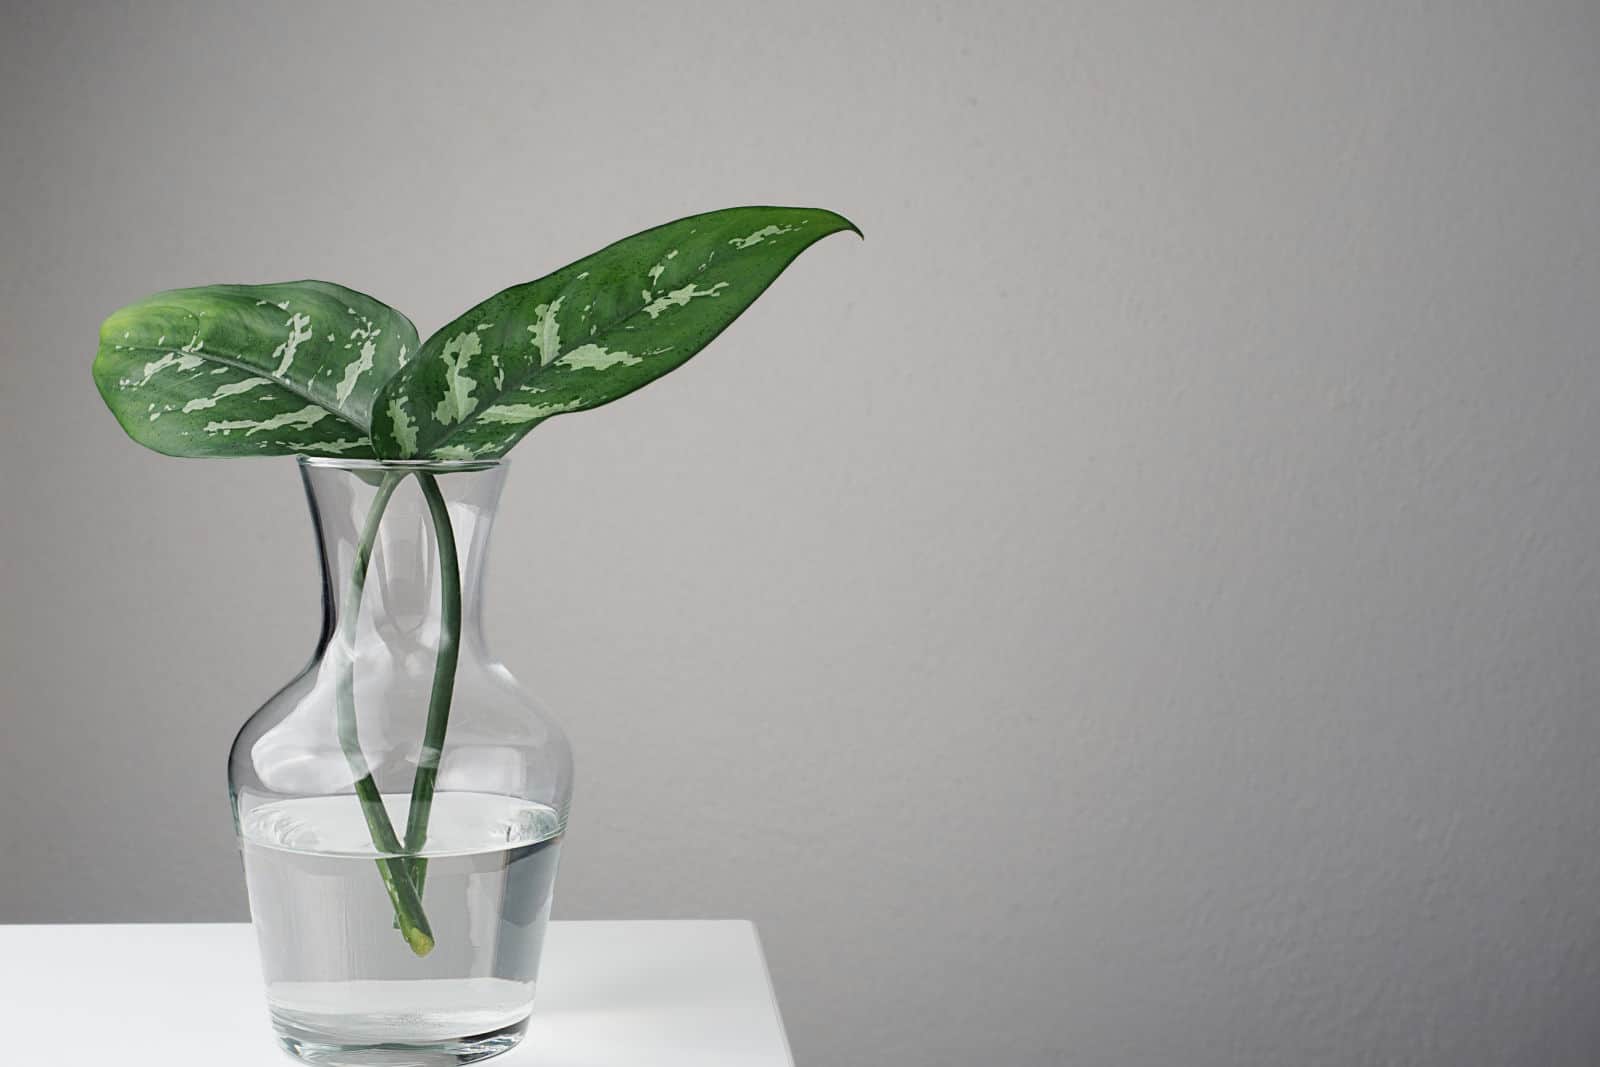 Two leaves of dumb cane plant - dieffenbachia - in glass vase on white desk